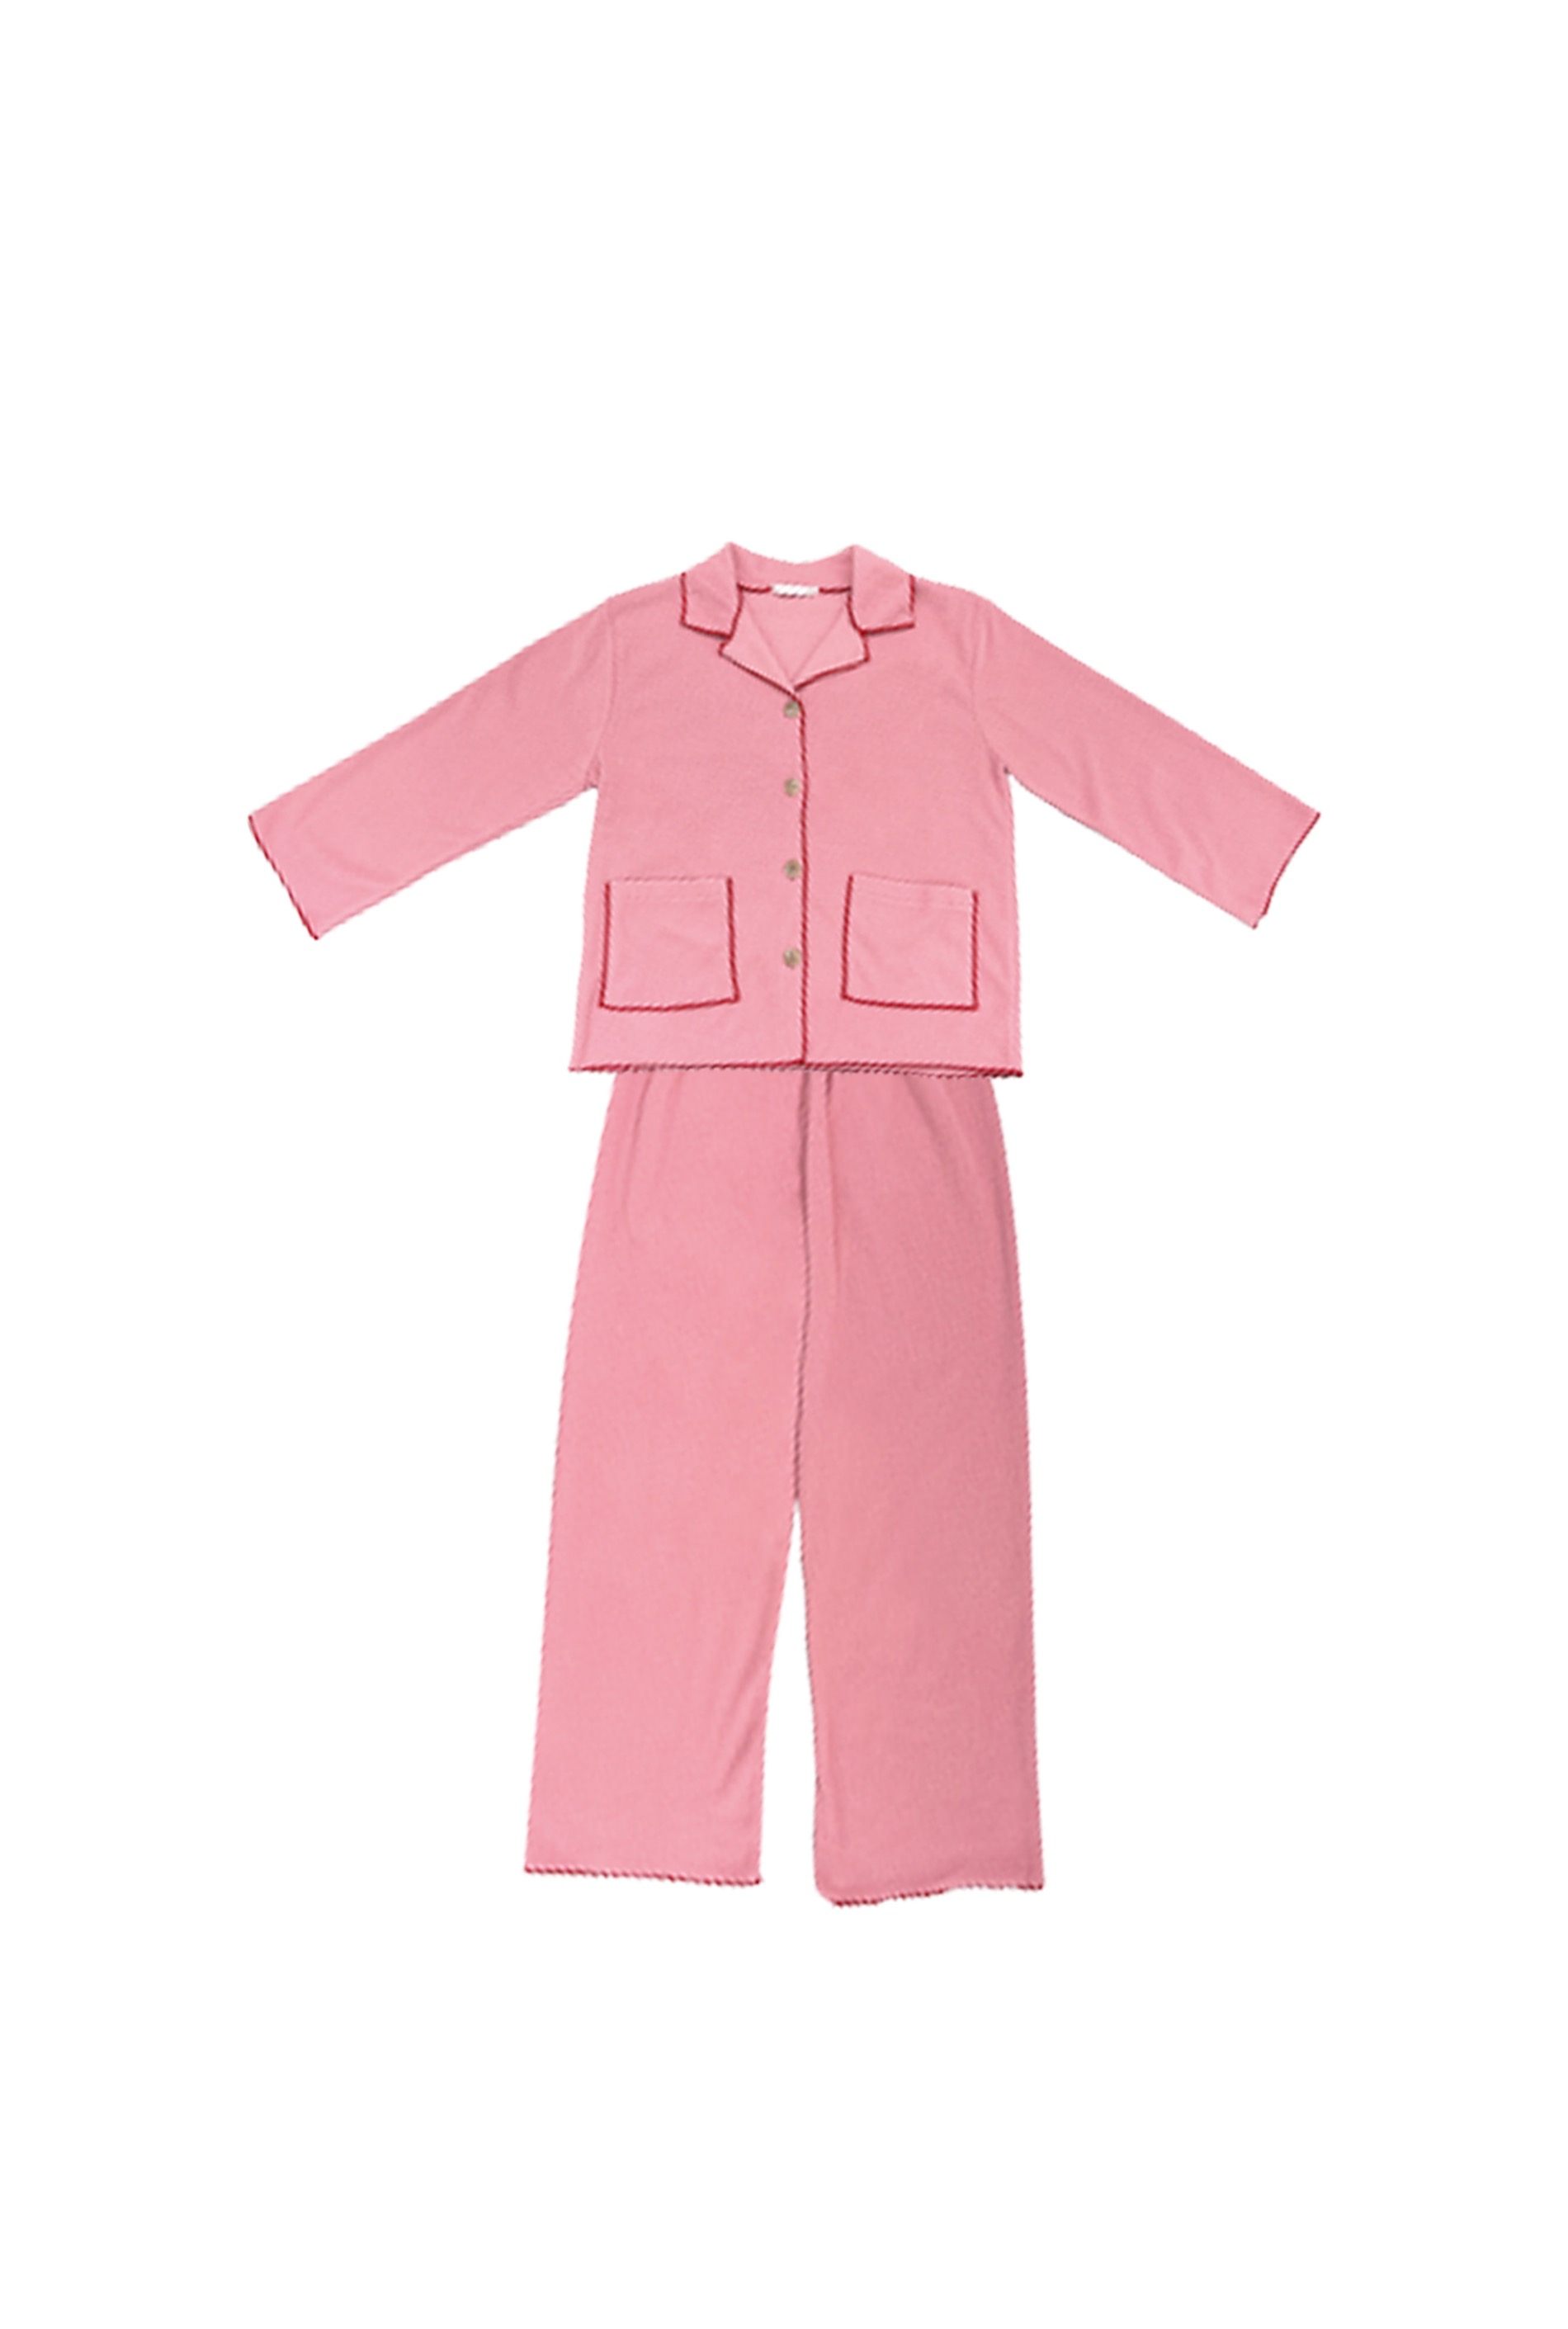 winter homewear _ pink